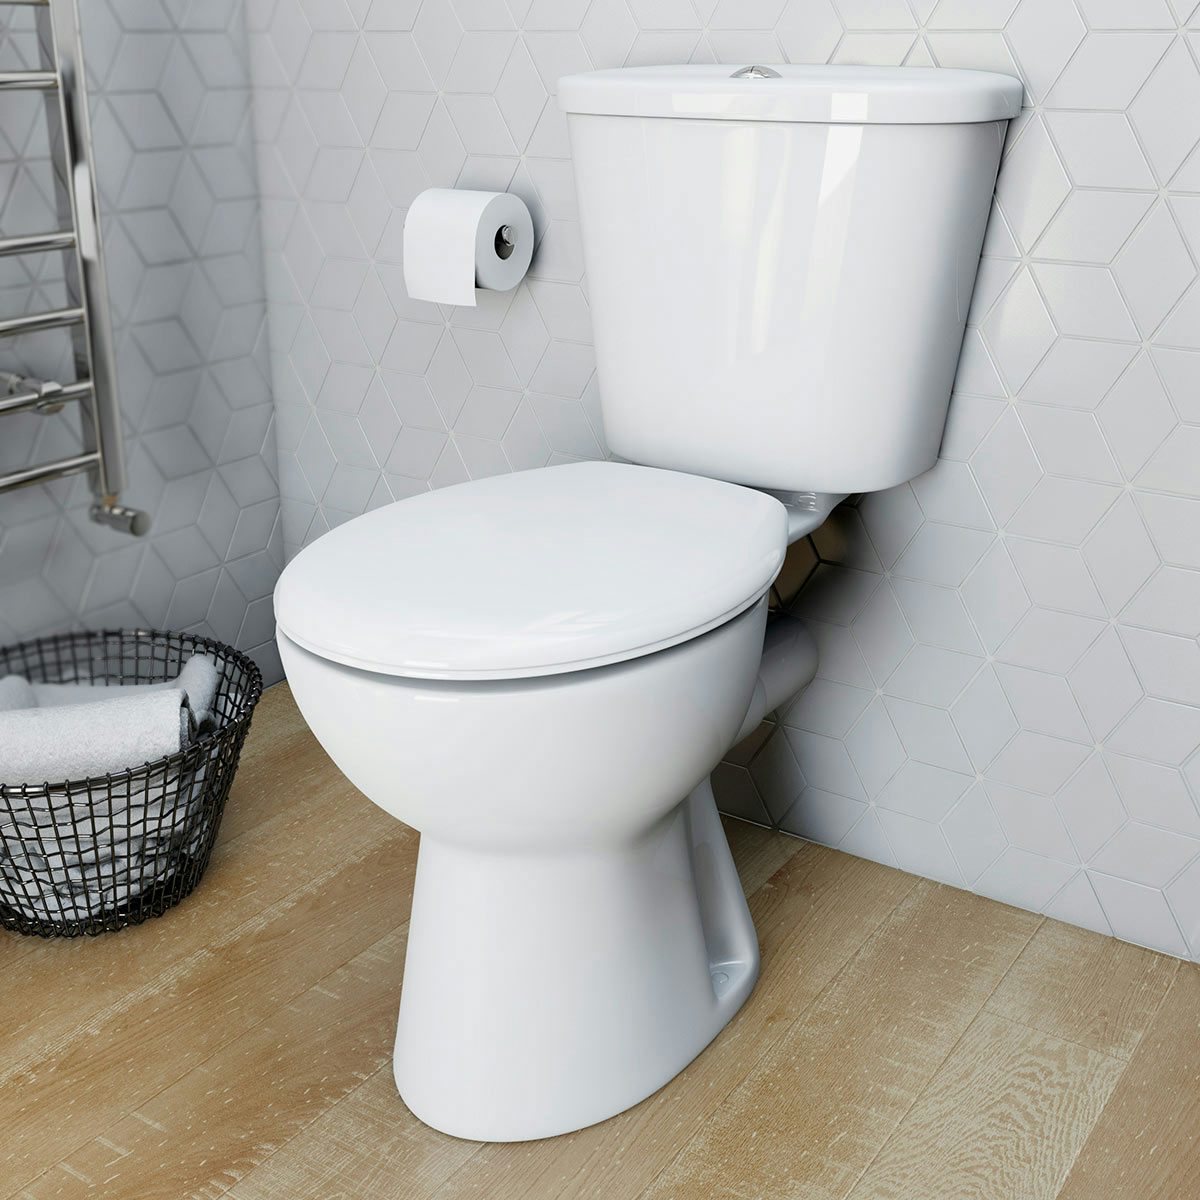 Standard round toilet seat